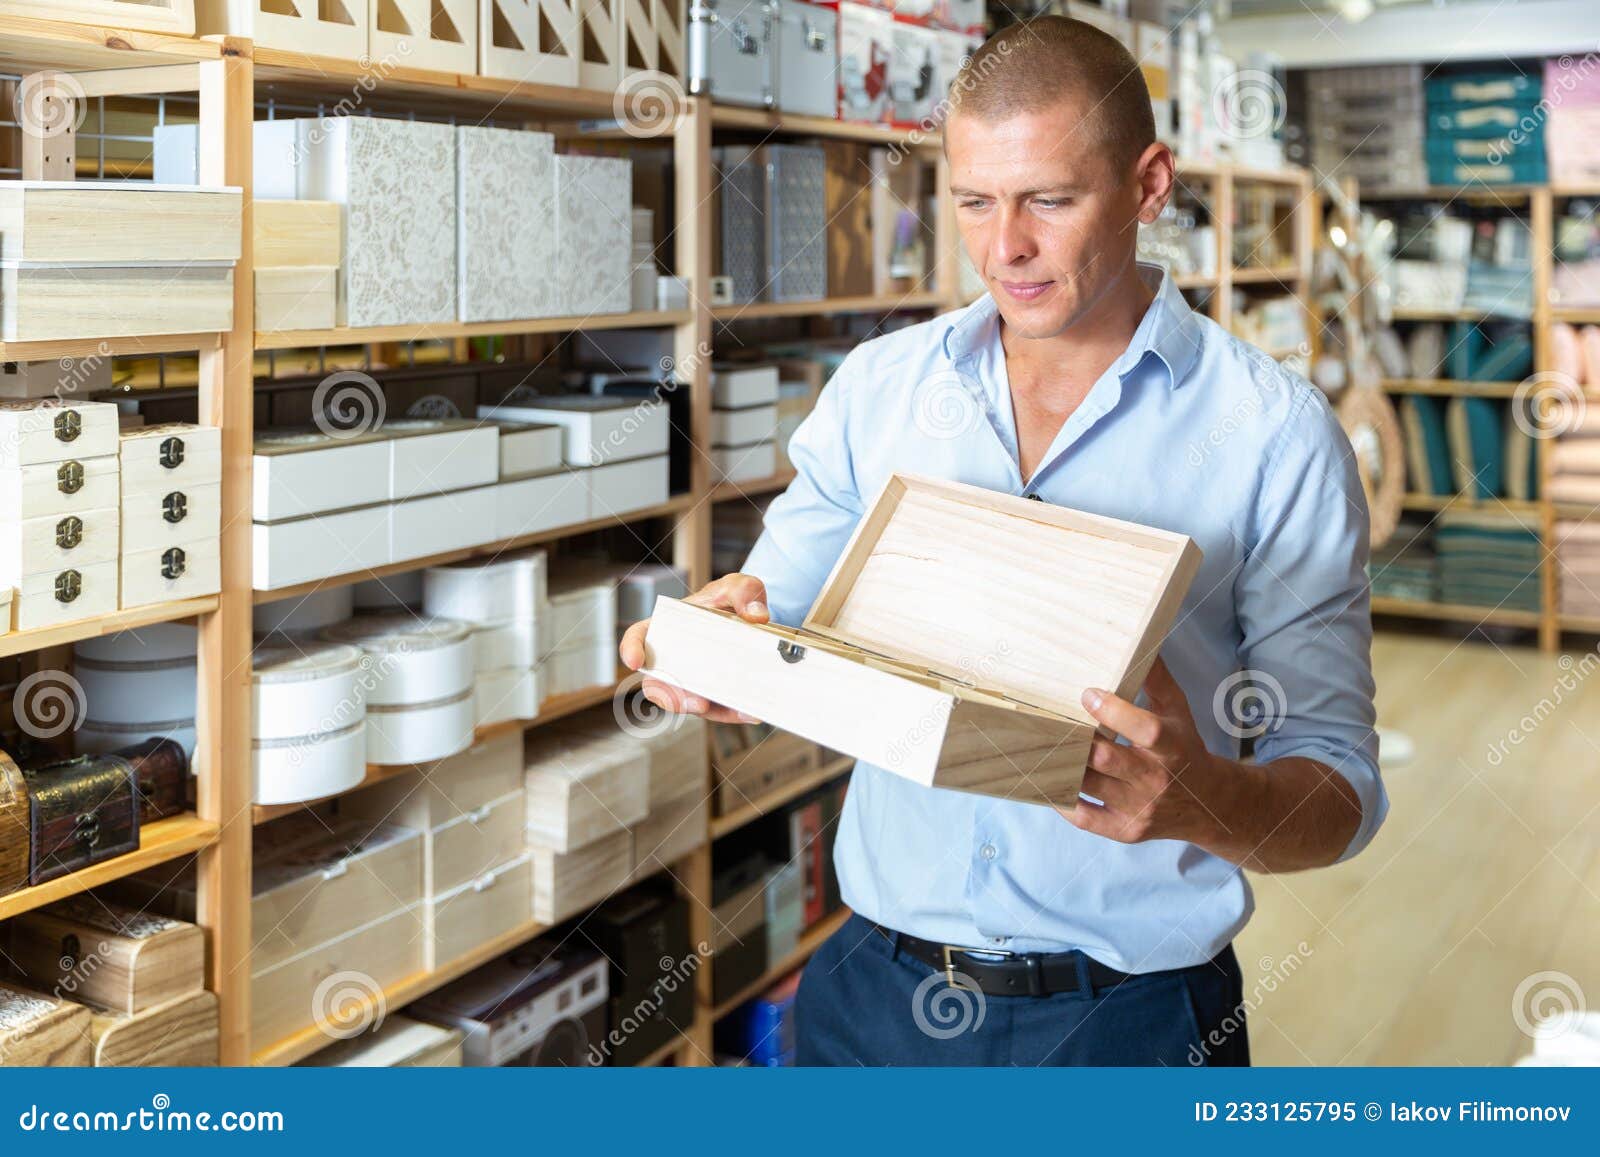 man with sundries storage box